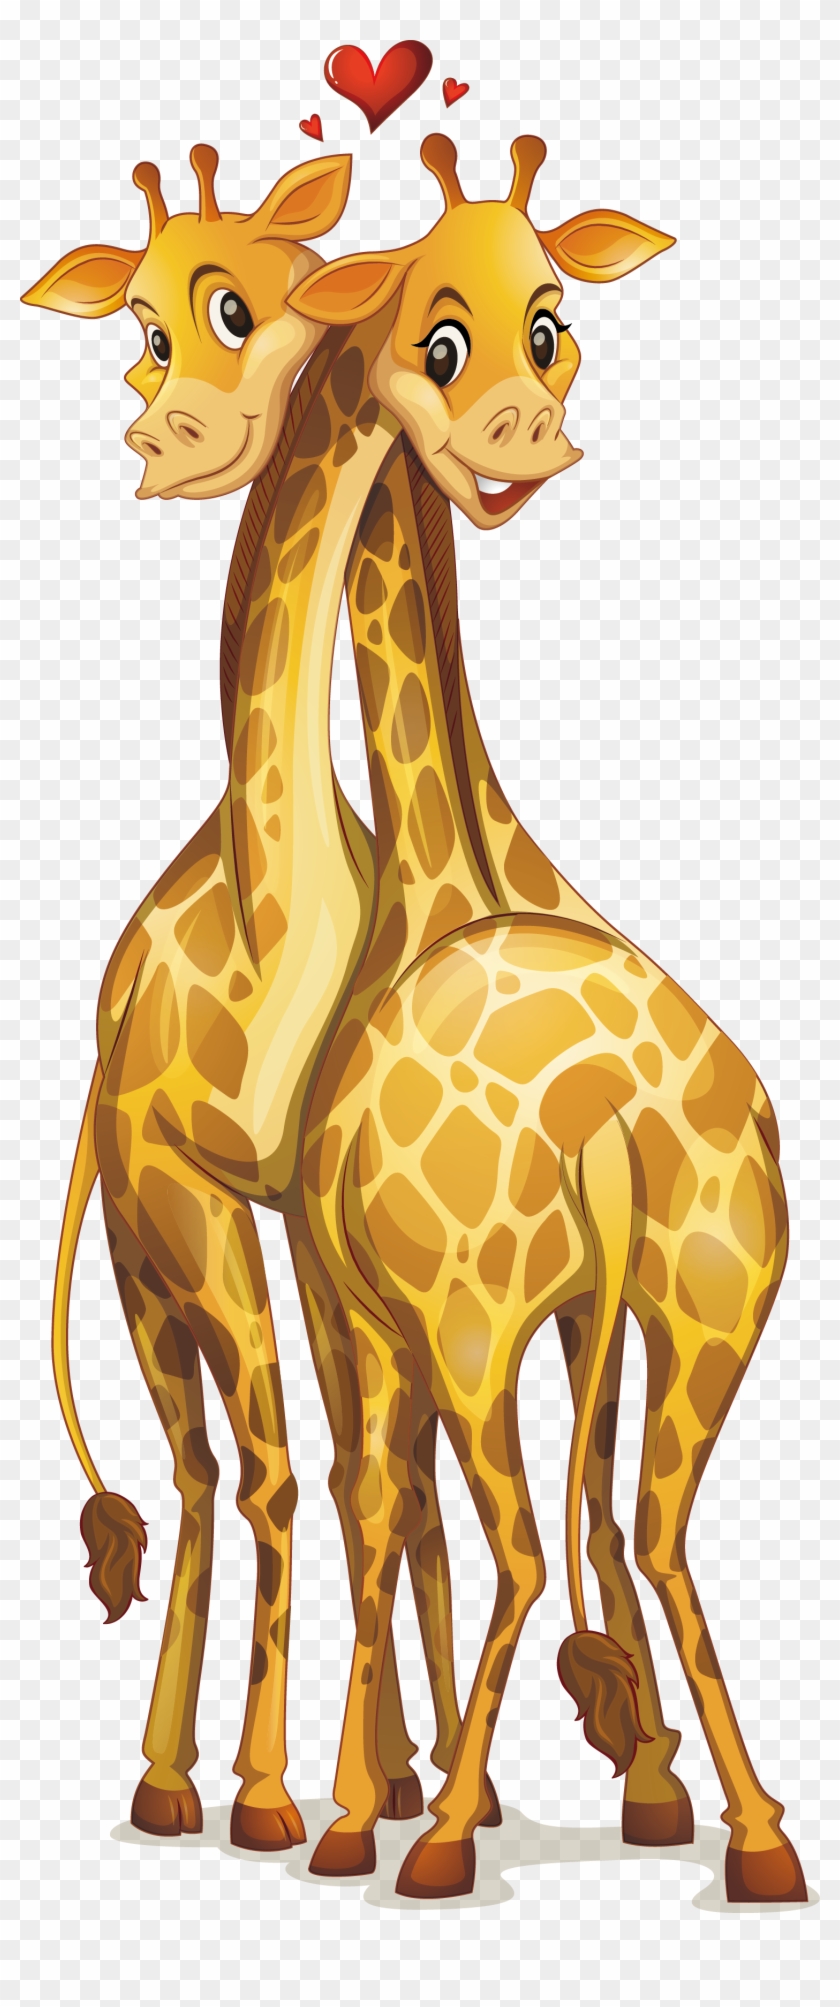 Giraffe Cartoon Royalty-free Illustration - Giraffe Cartoon Royalty-free Illustration #779352